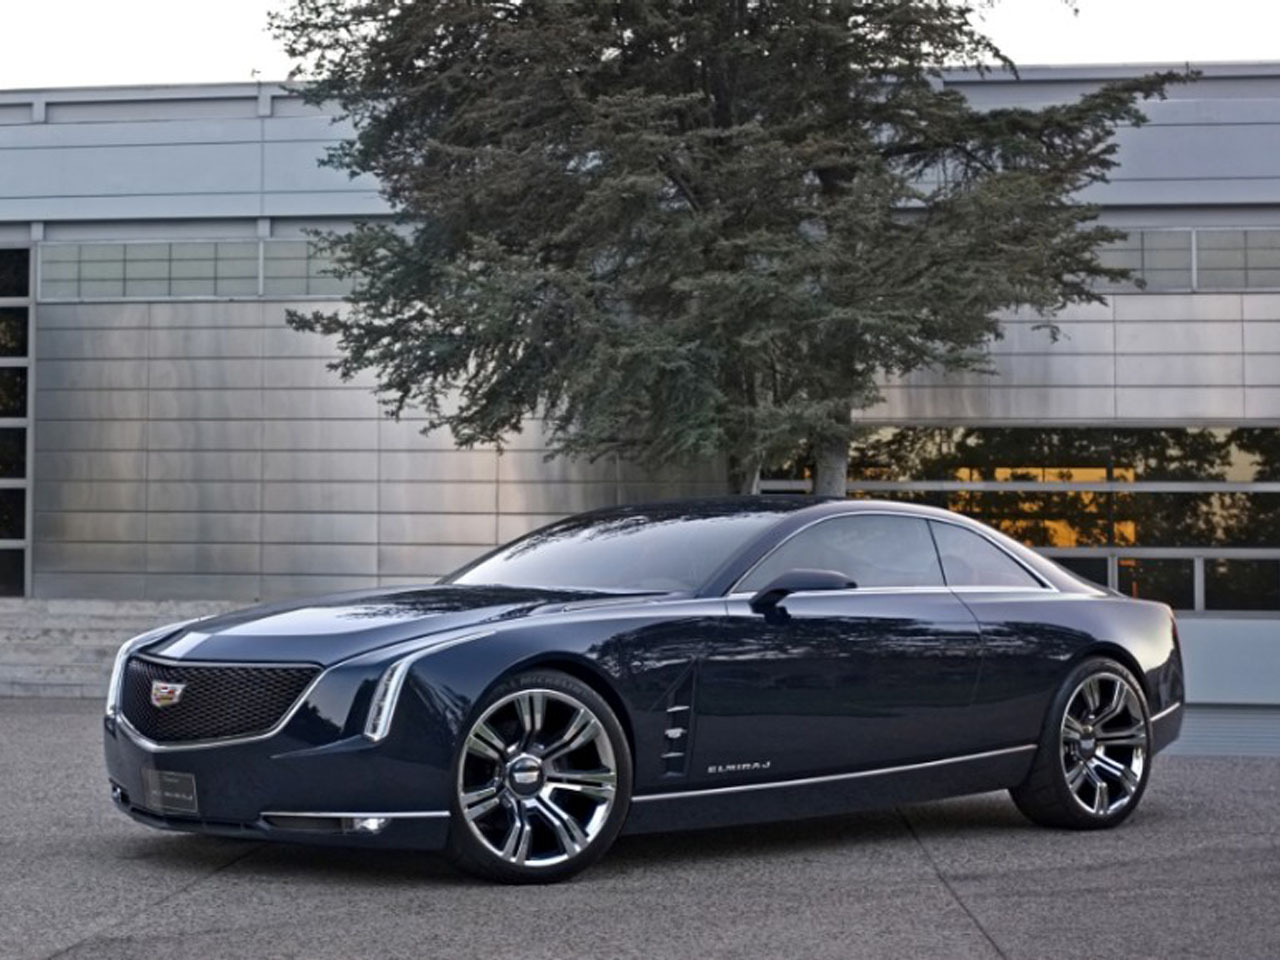 Cadillac shows off big twodoor coupe concept car CBS News